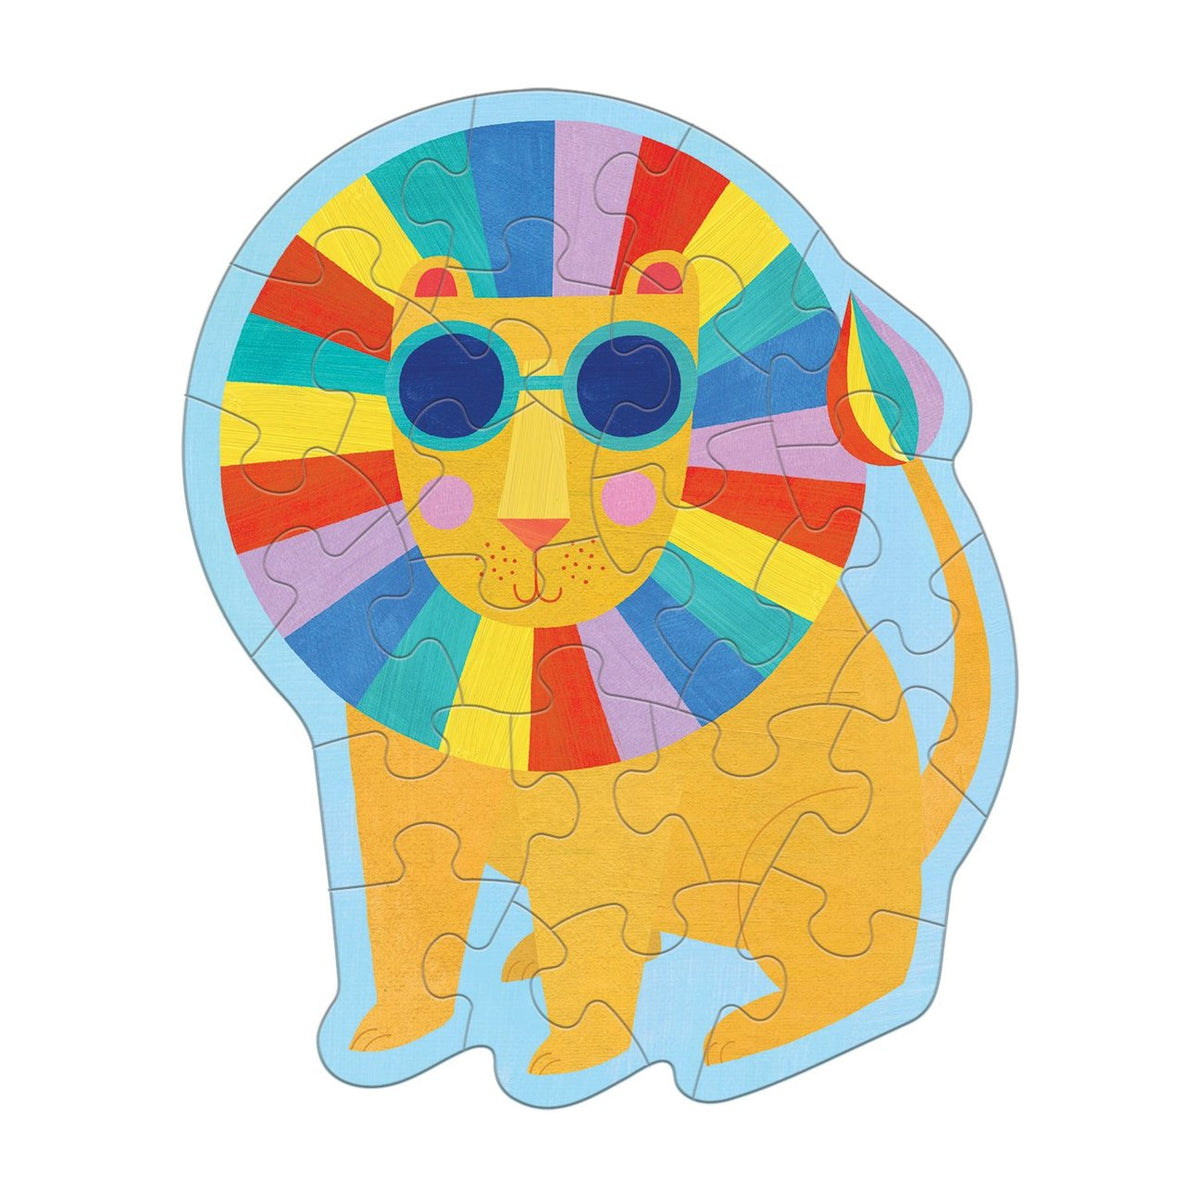 Mudpuppy 24 Piece Shaped Mini Puzzle - Rainbow Lion